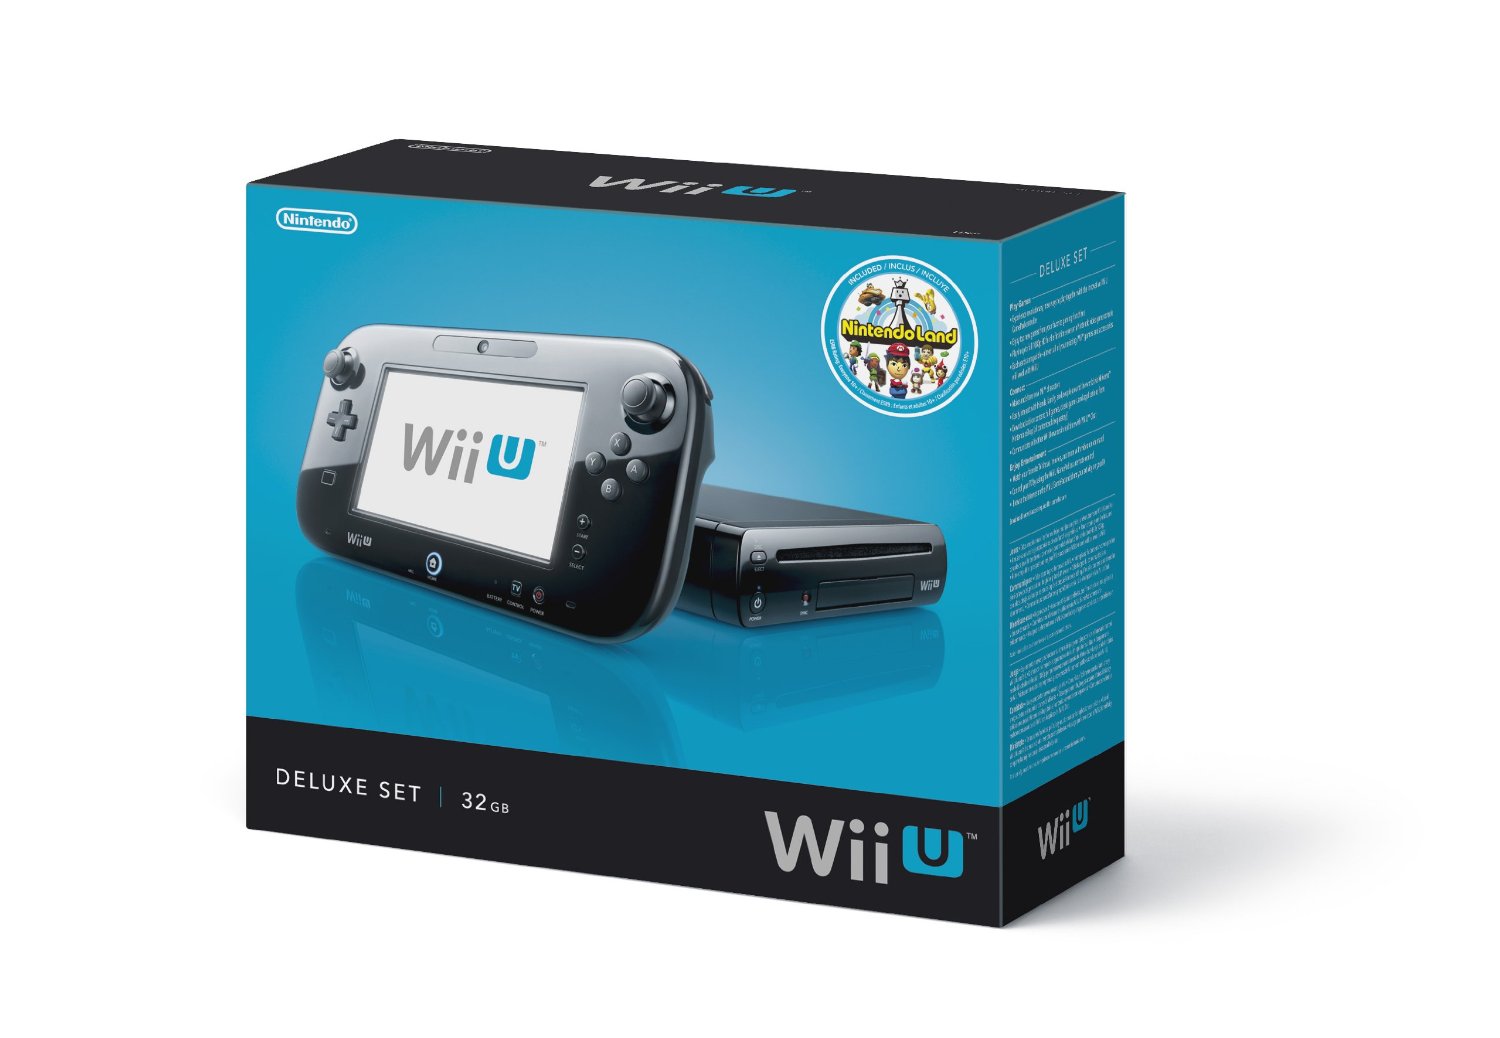 Perforatie Stadium Worden Nintendo: "Wii U production has ended globally"